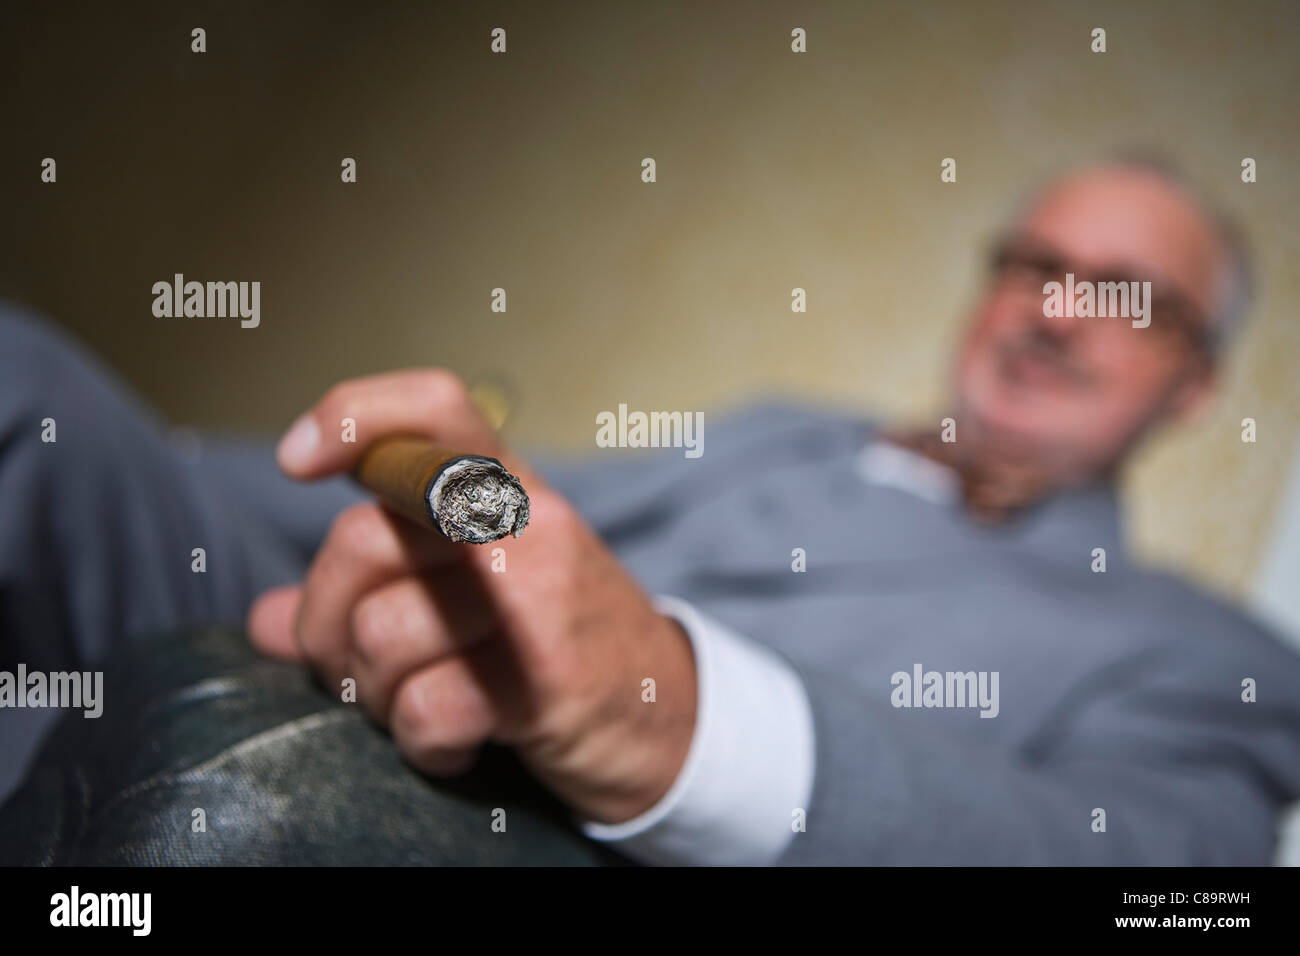 Germany, Braunschweig, Senior man smoking cigar, close up Stock Photo